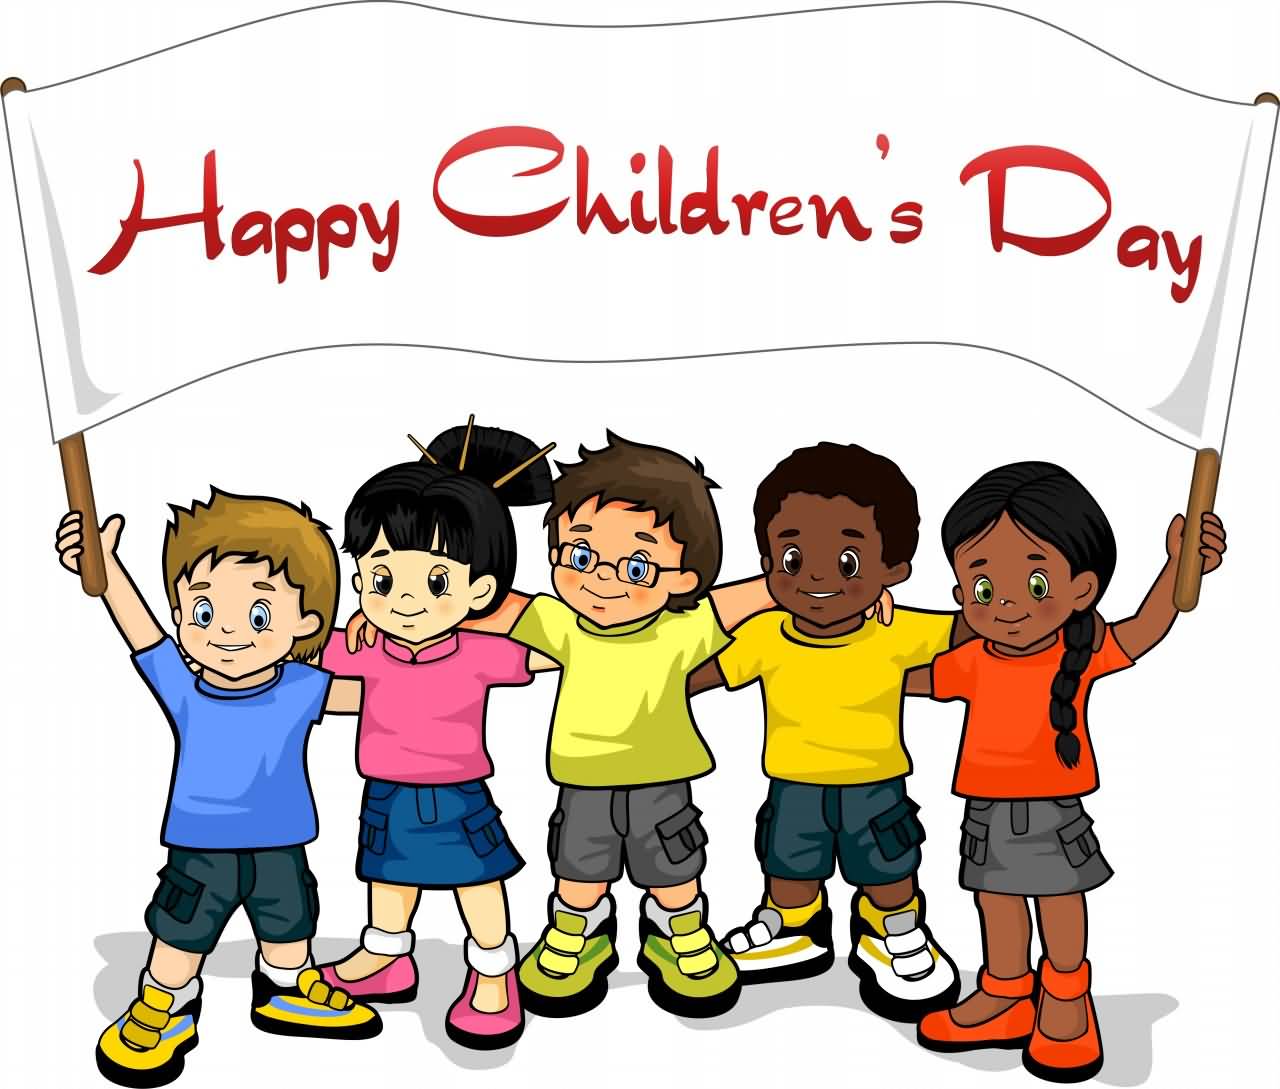 Happy Children’s Day Kids With Banner Illustration